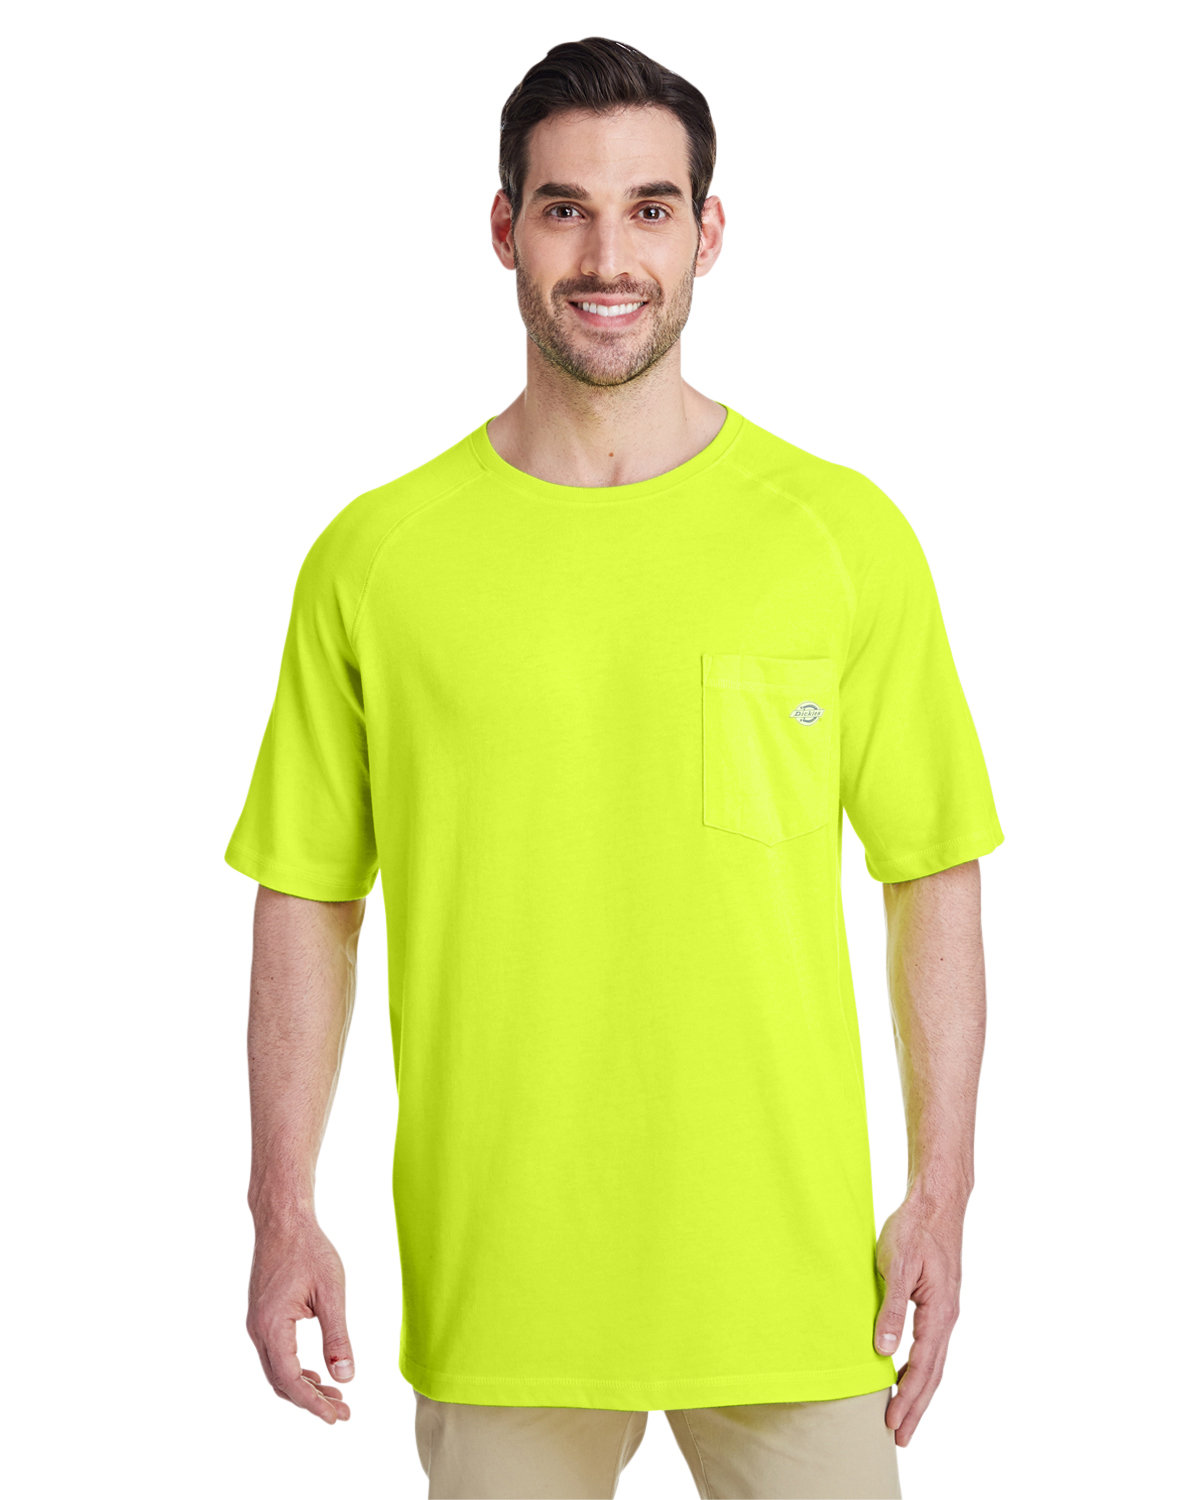 Dickies Men's 5.5 oz. Temp-IQ Performance T-Shirt BRIGHT YELLOW 